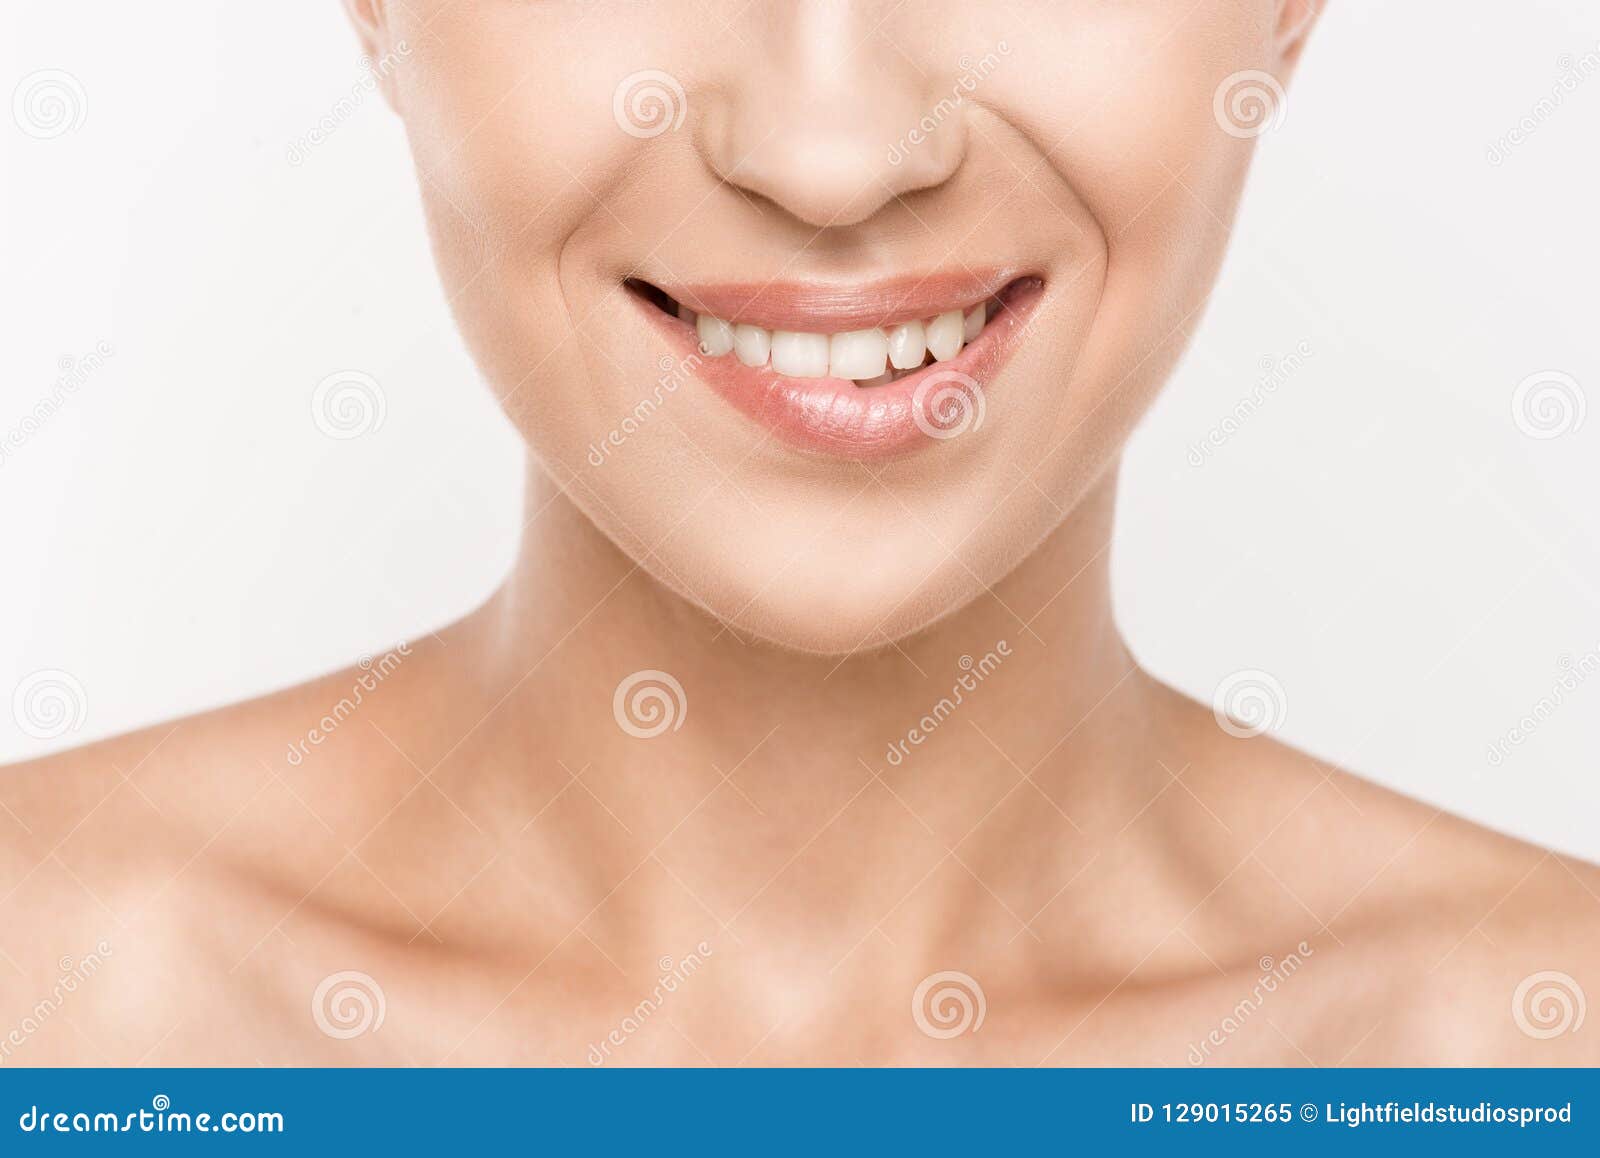 Cropped View Of Beautiful Woman Biting Lip Stock Image